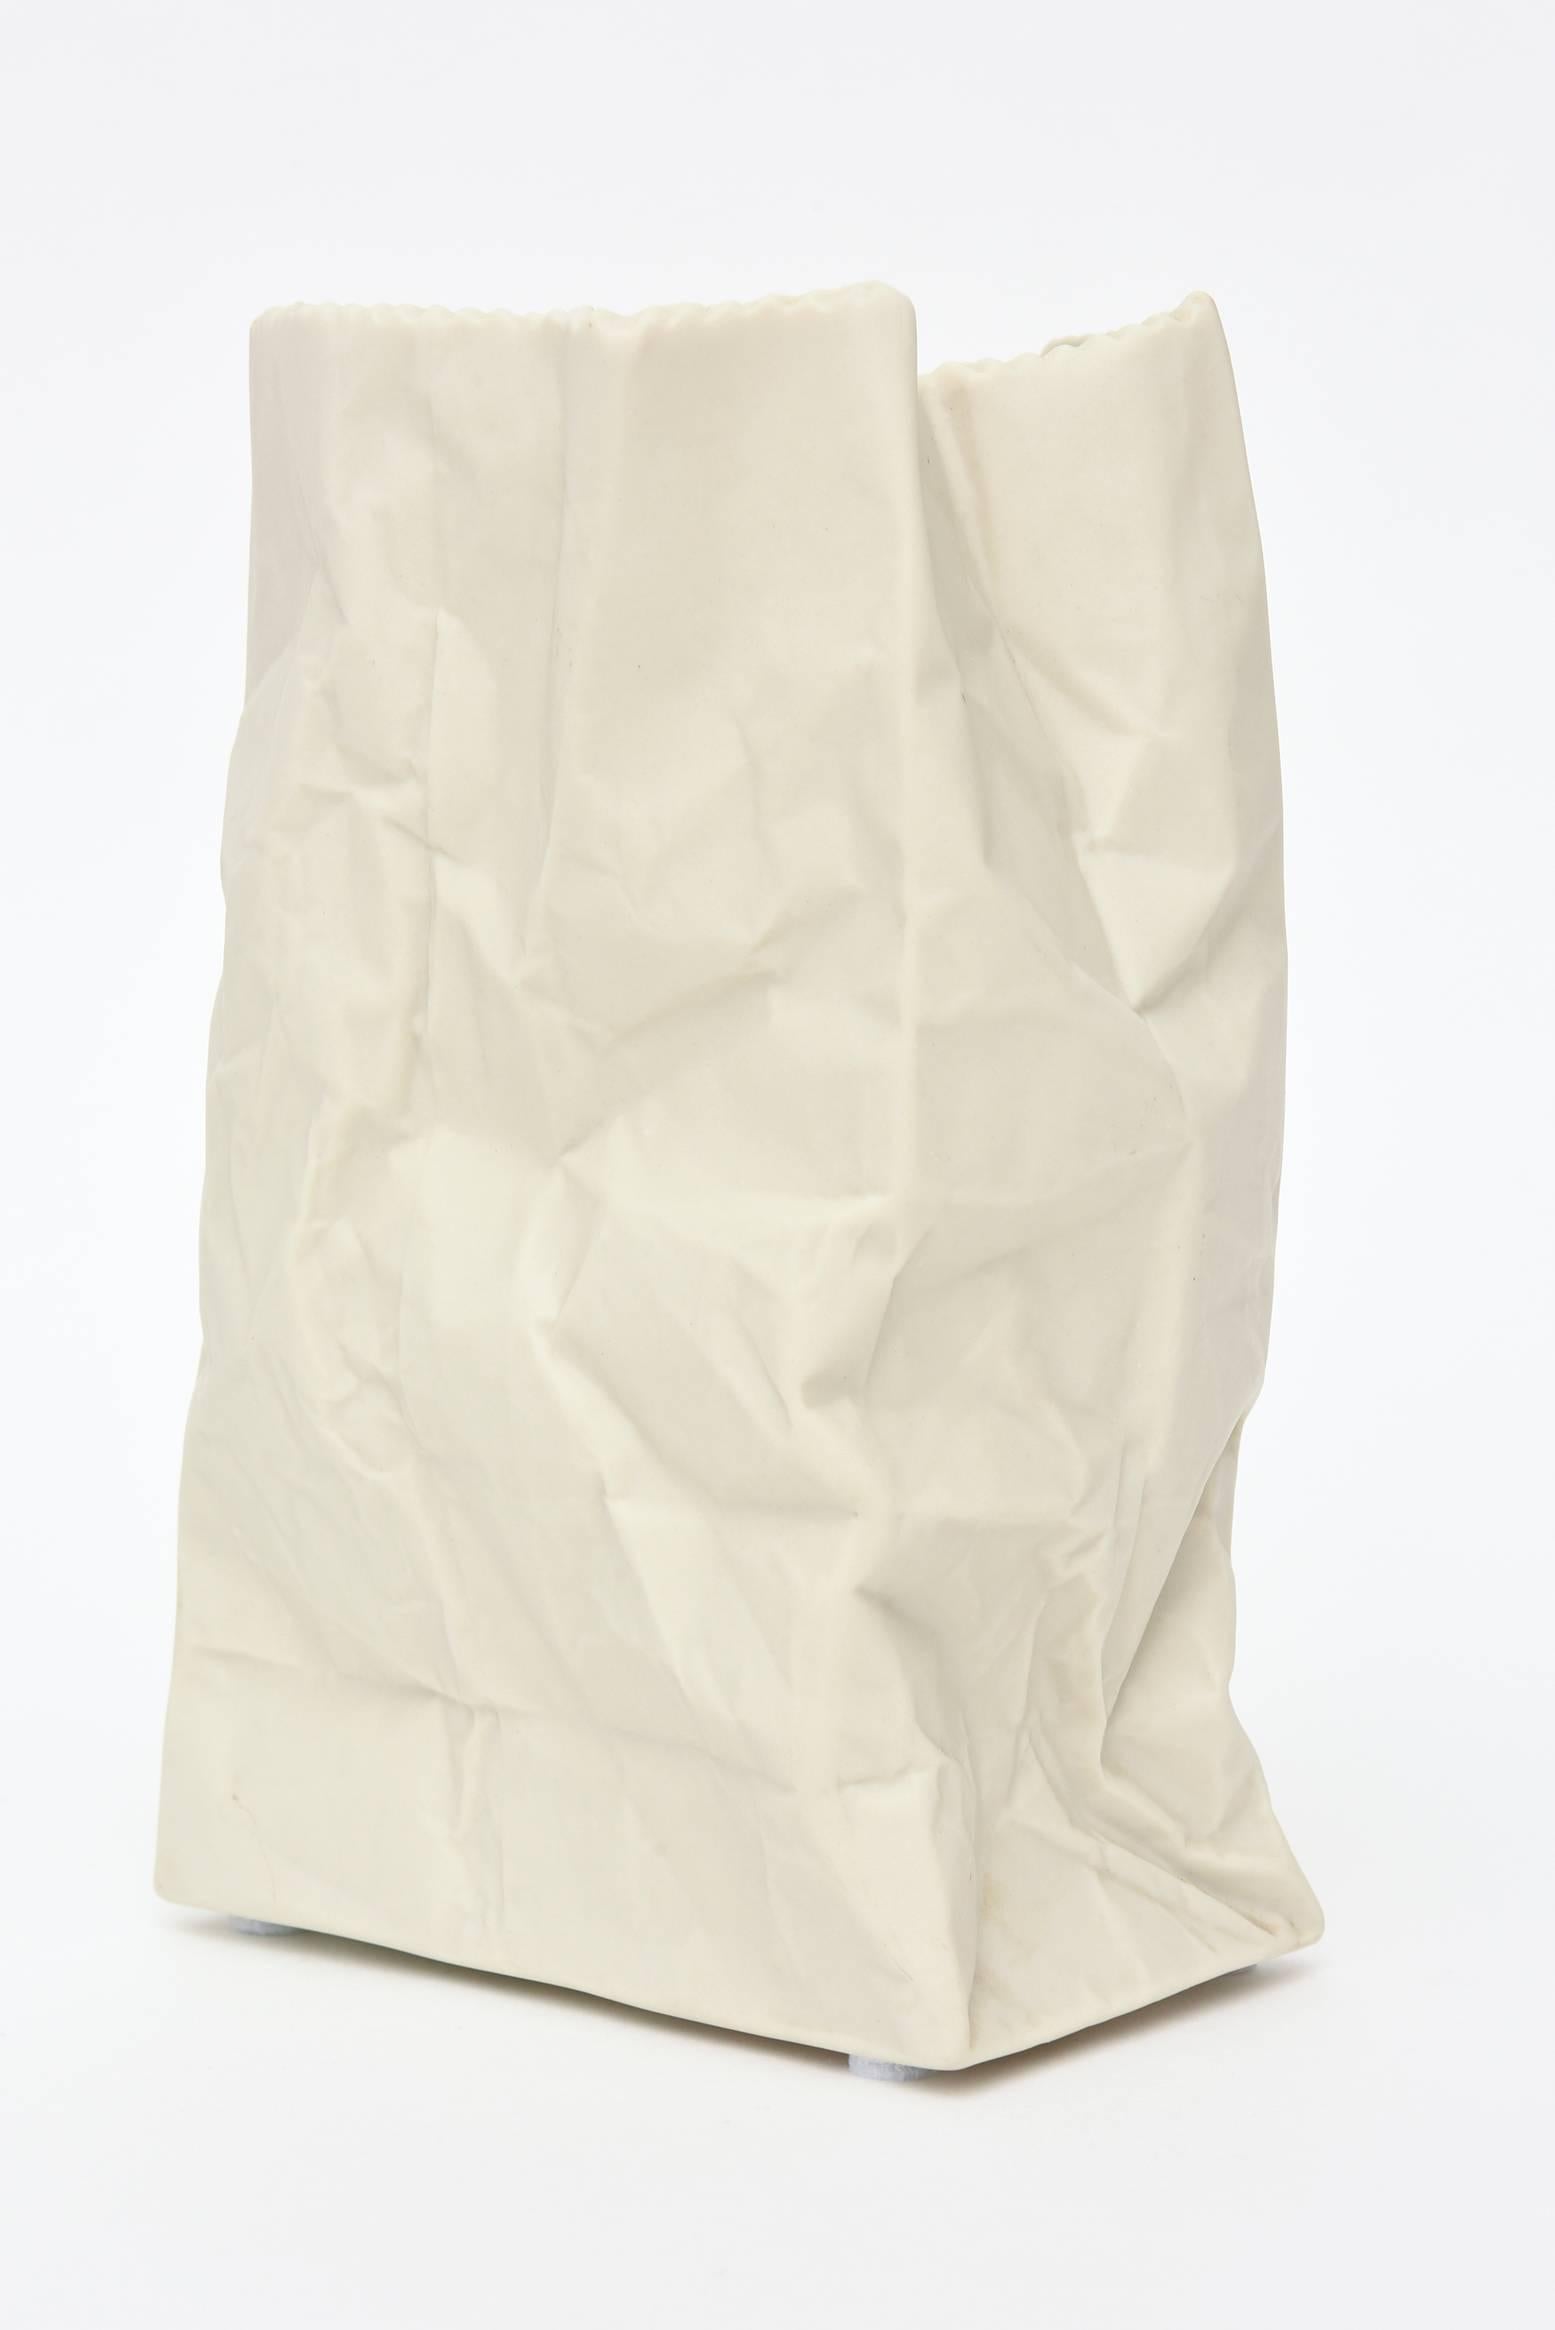 American Crushed and Folded Bag Ceramic Sculpture or Vase /SATURDAY SALE